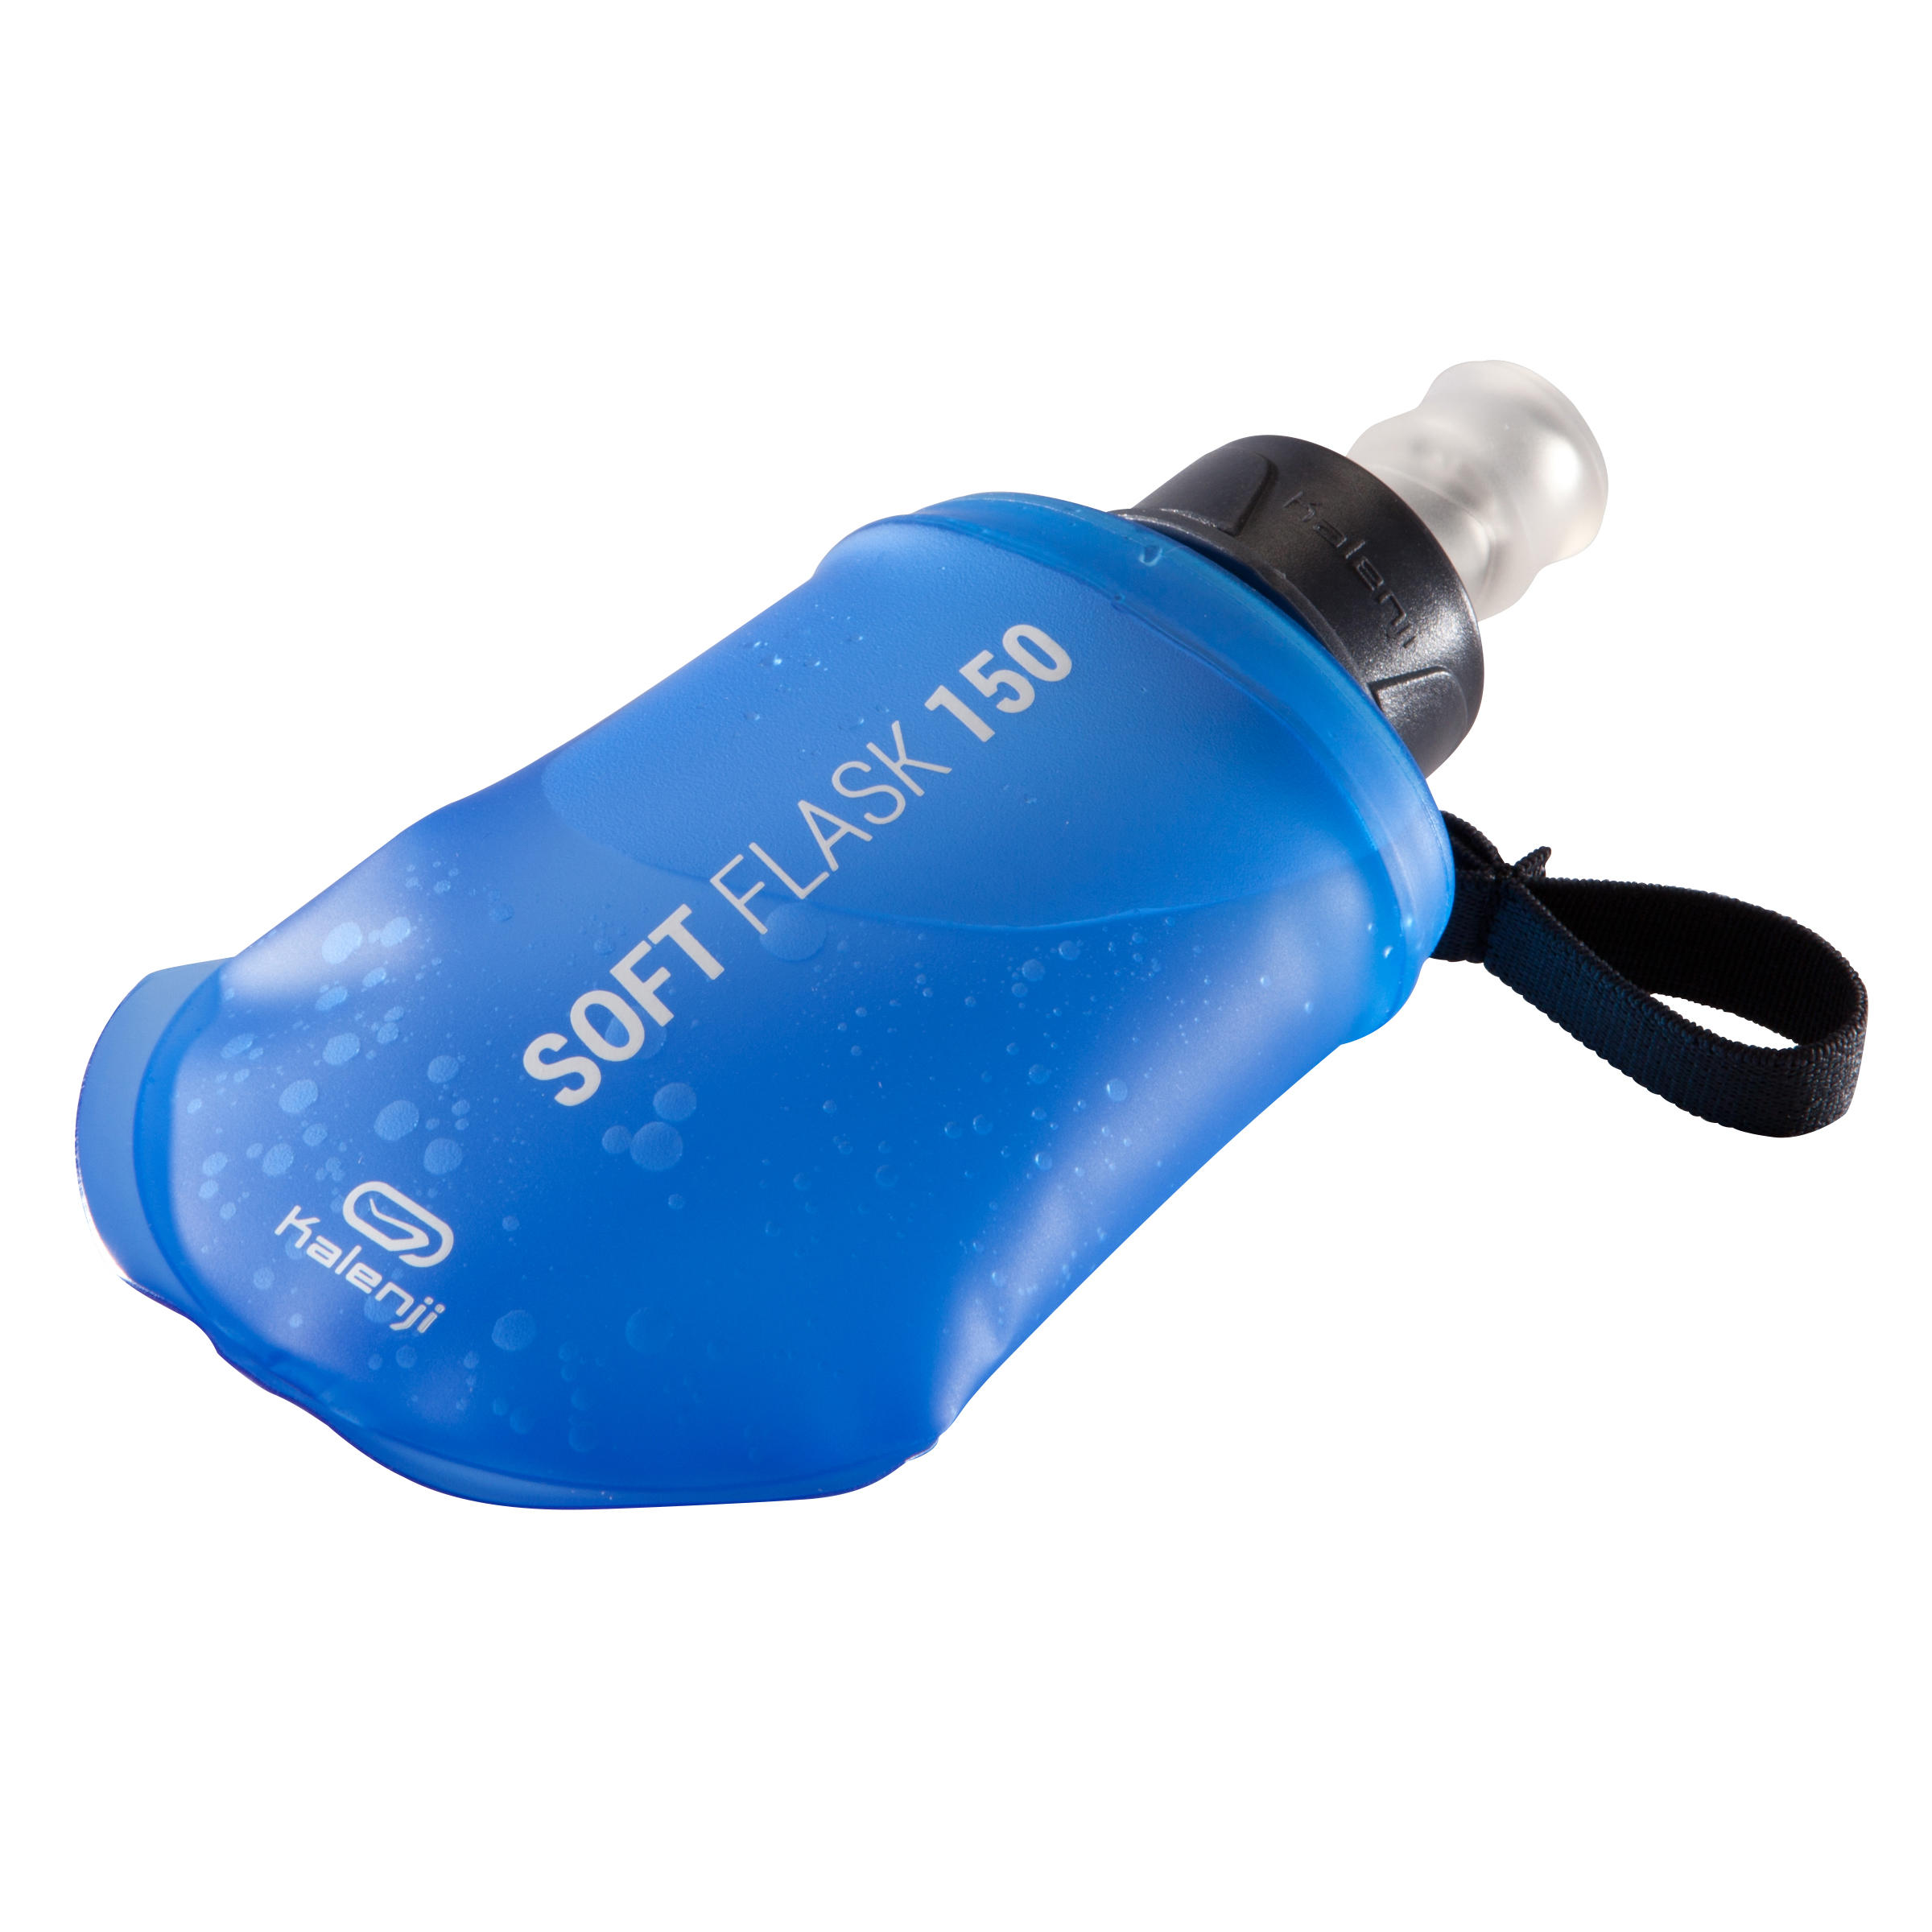 collapsible water bottle decathlon